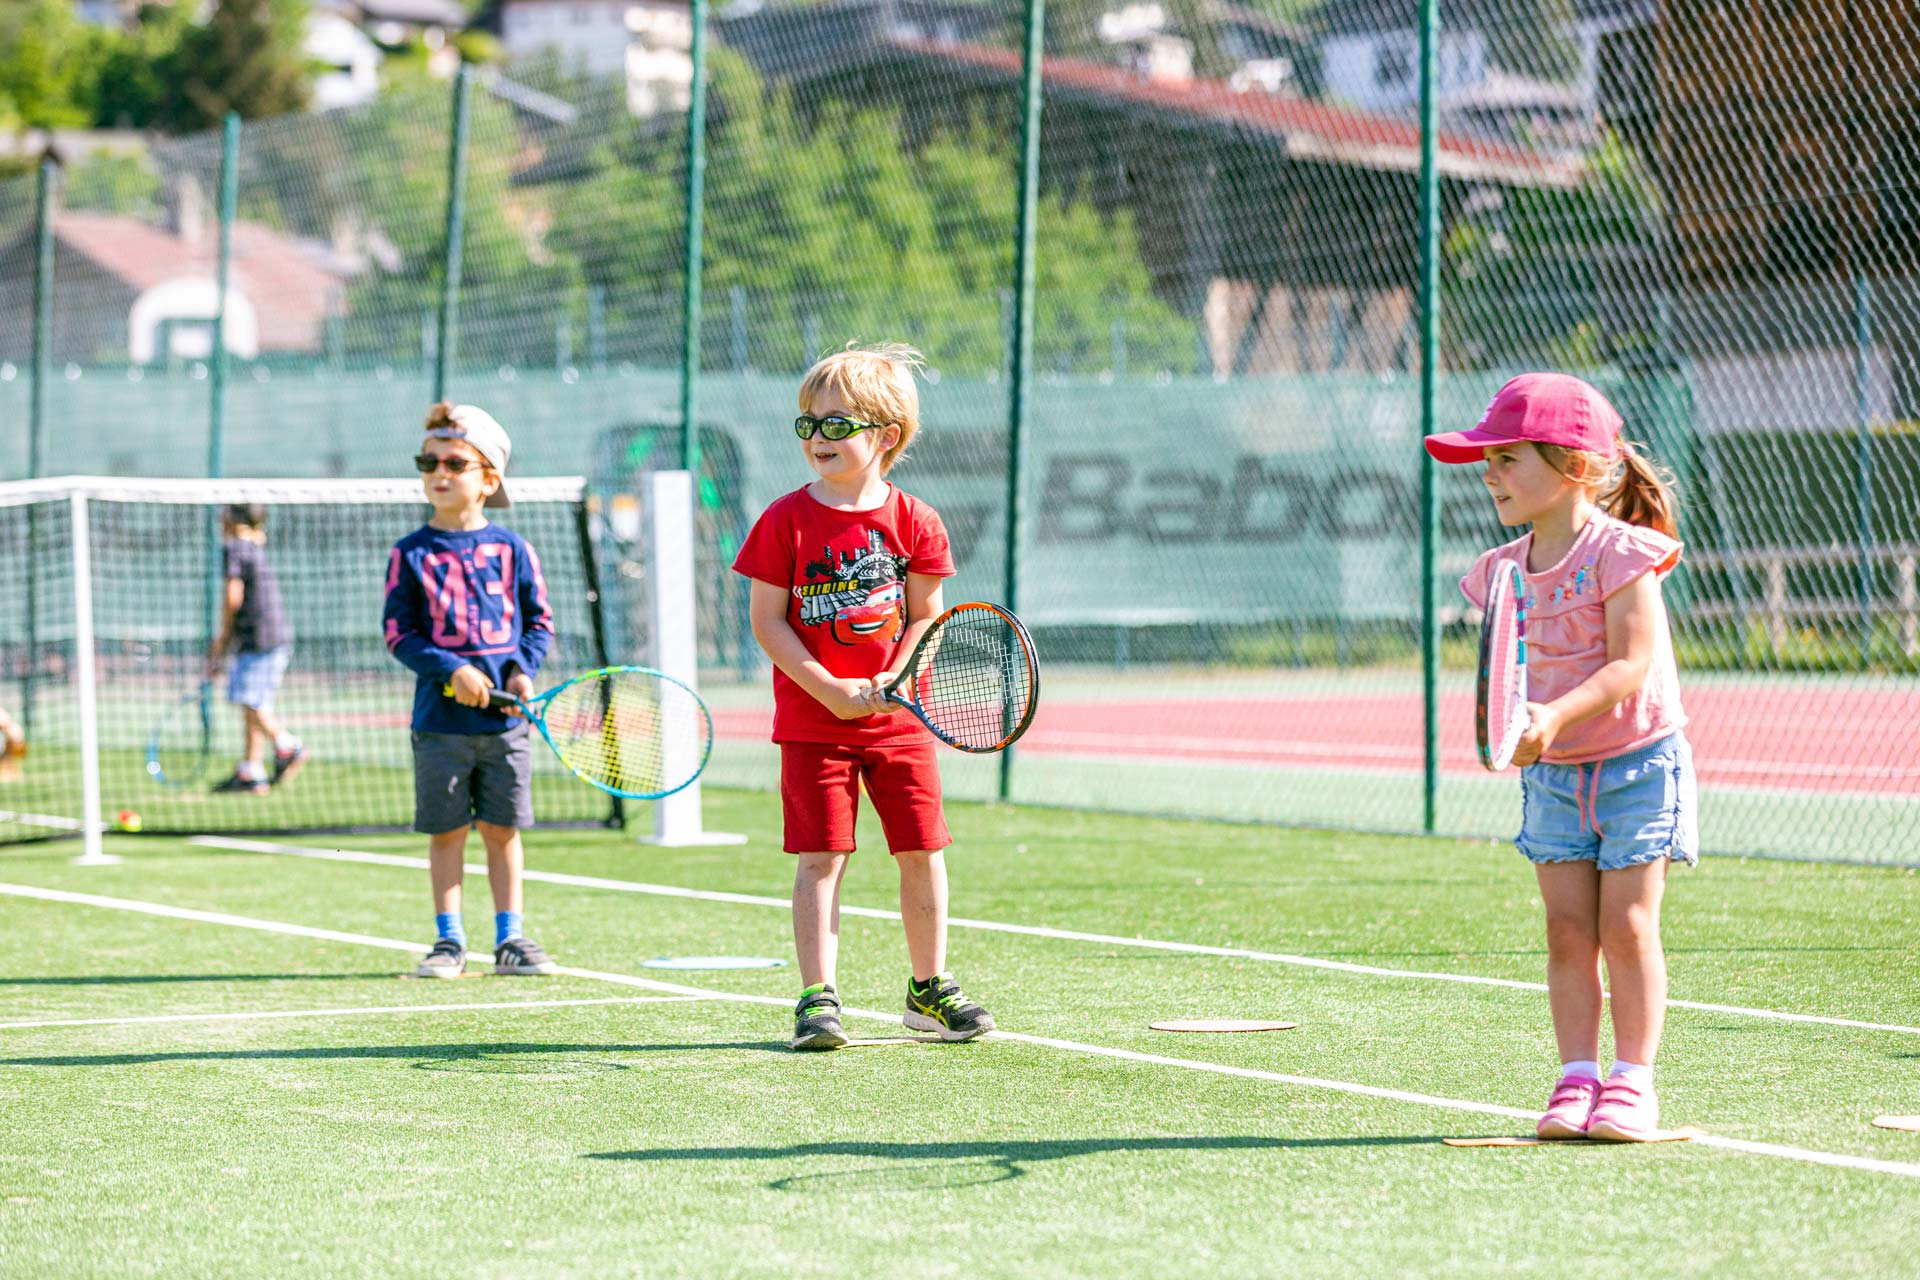 corso-laboratorio-tennis-bambini-megeve